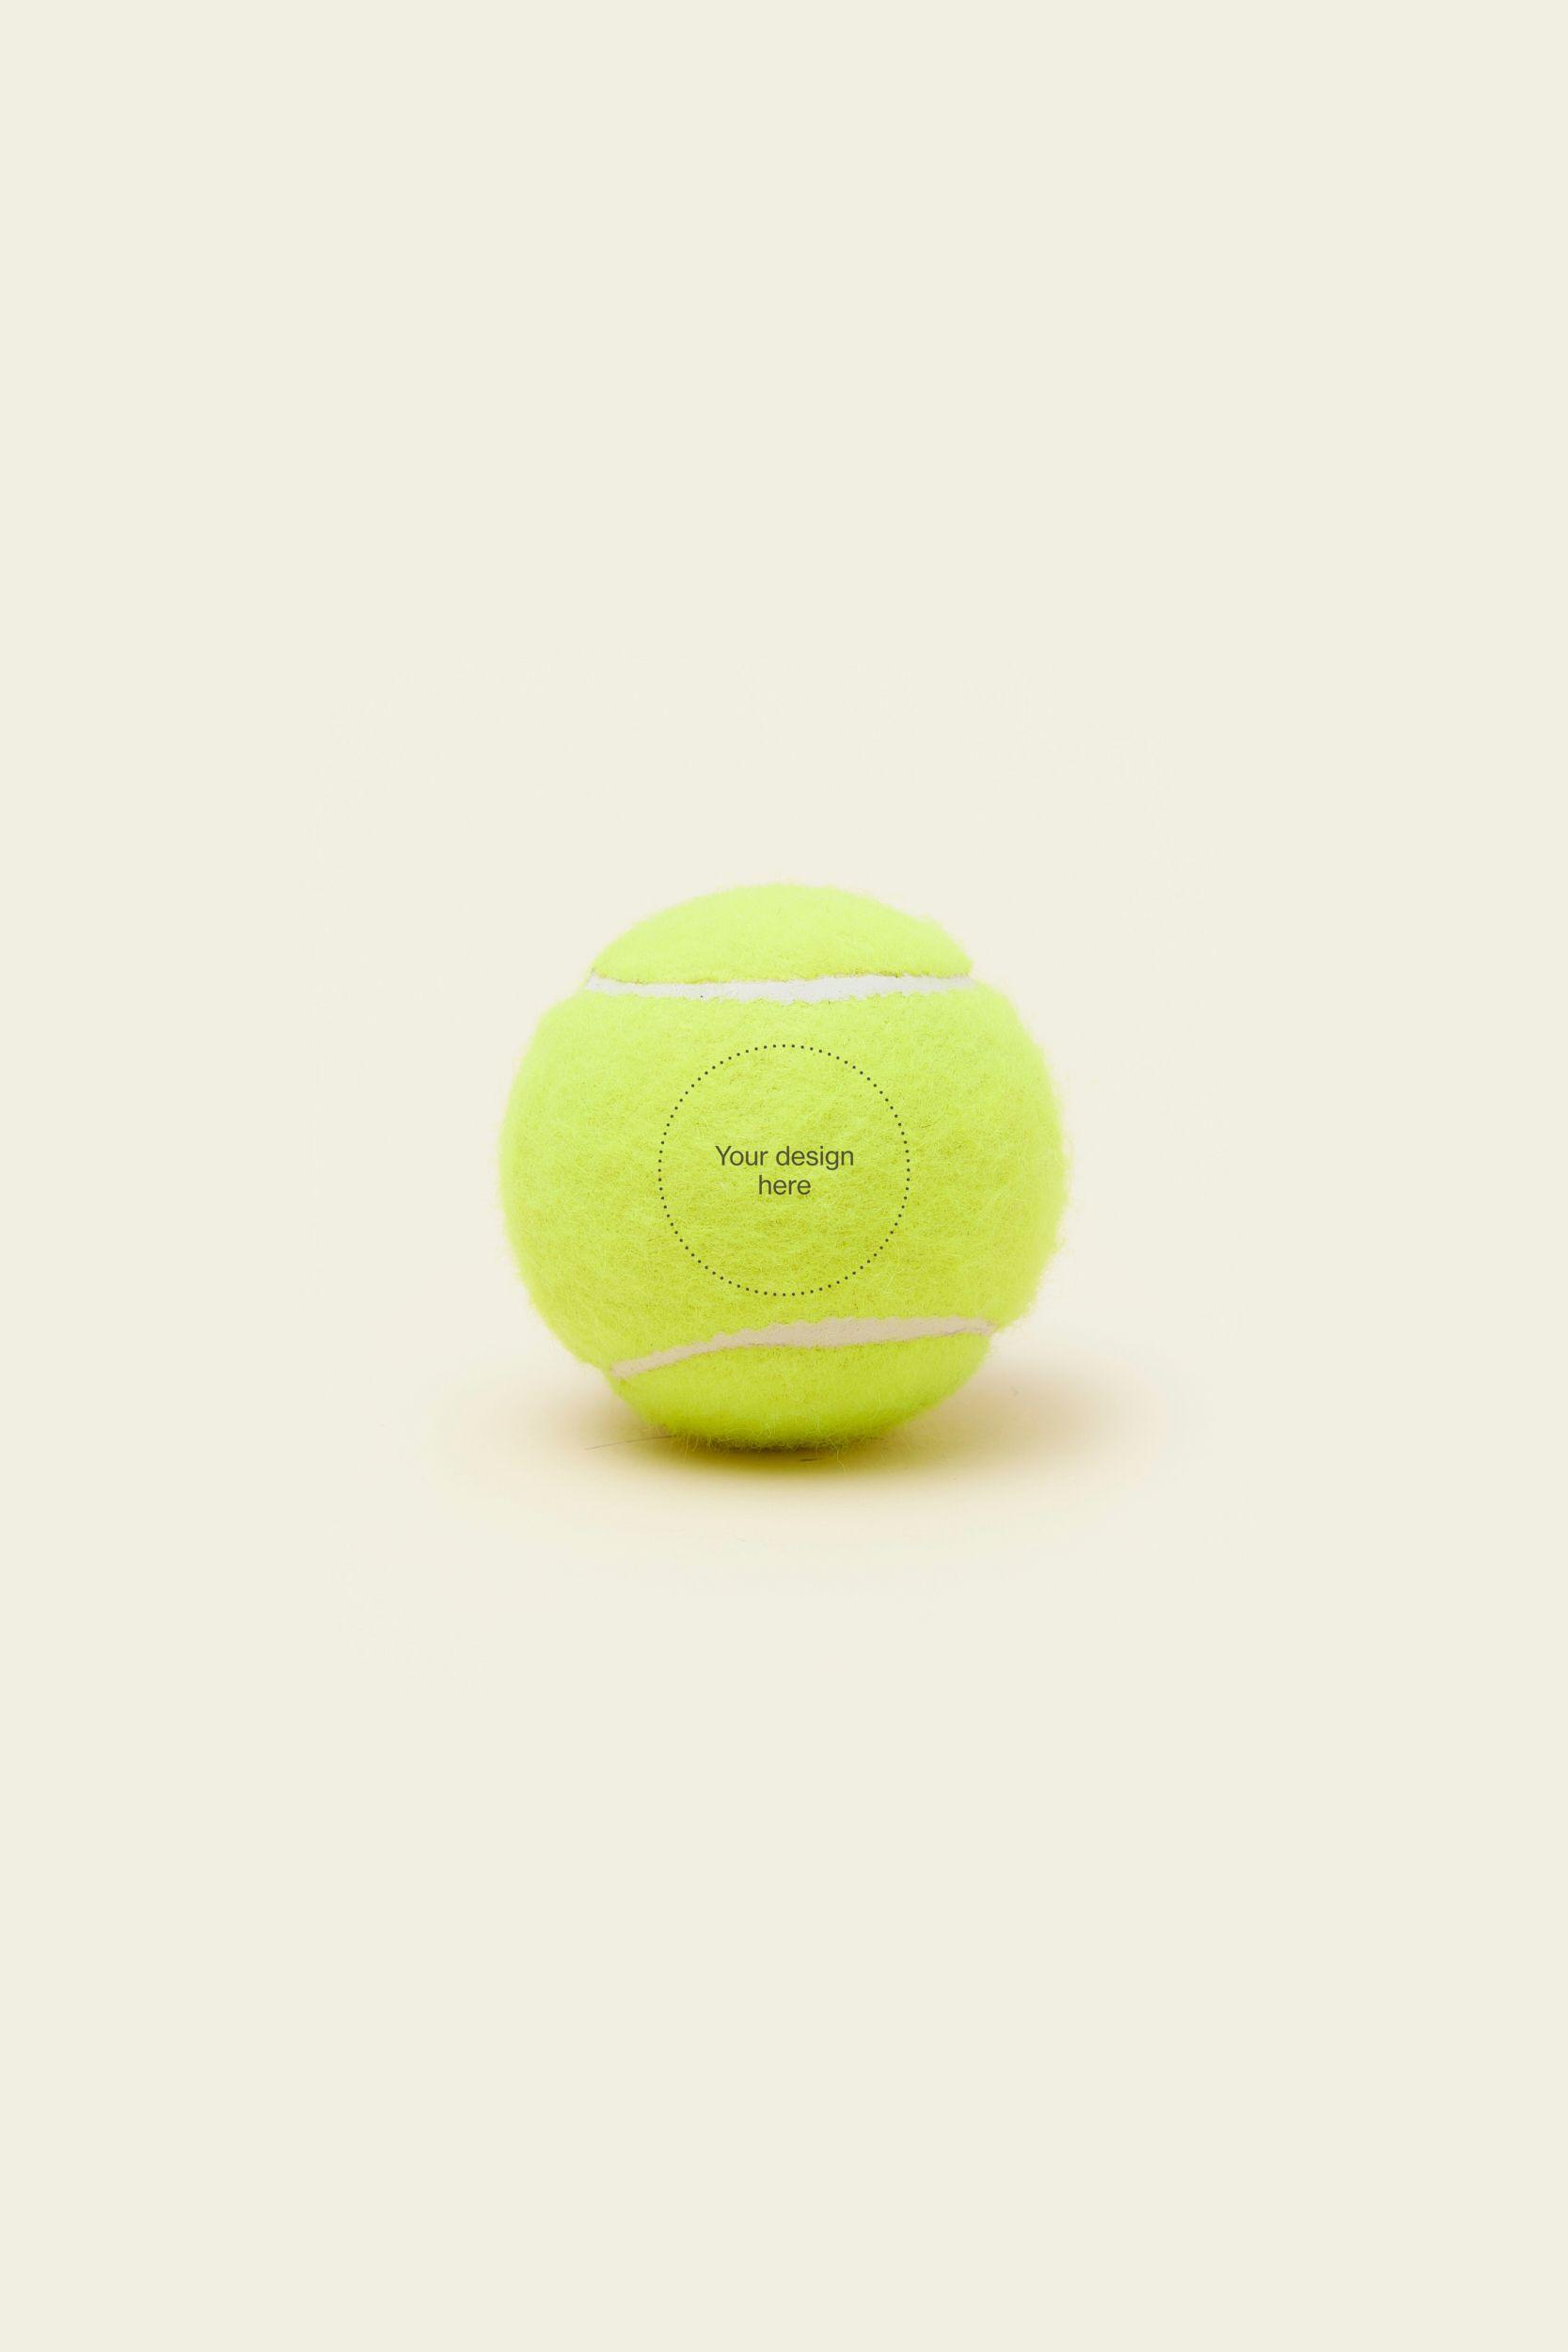 MERCHERY-23-Tennis ball_yellow+logo.jpg